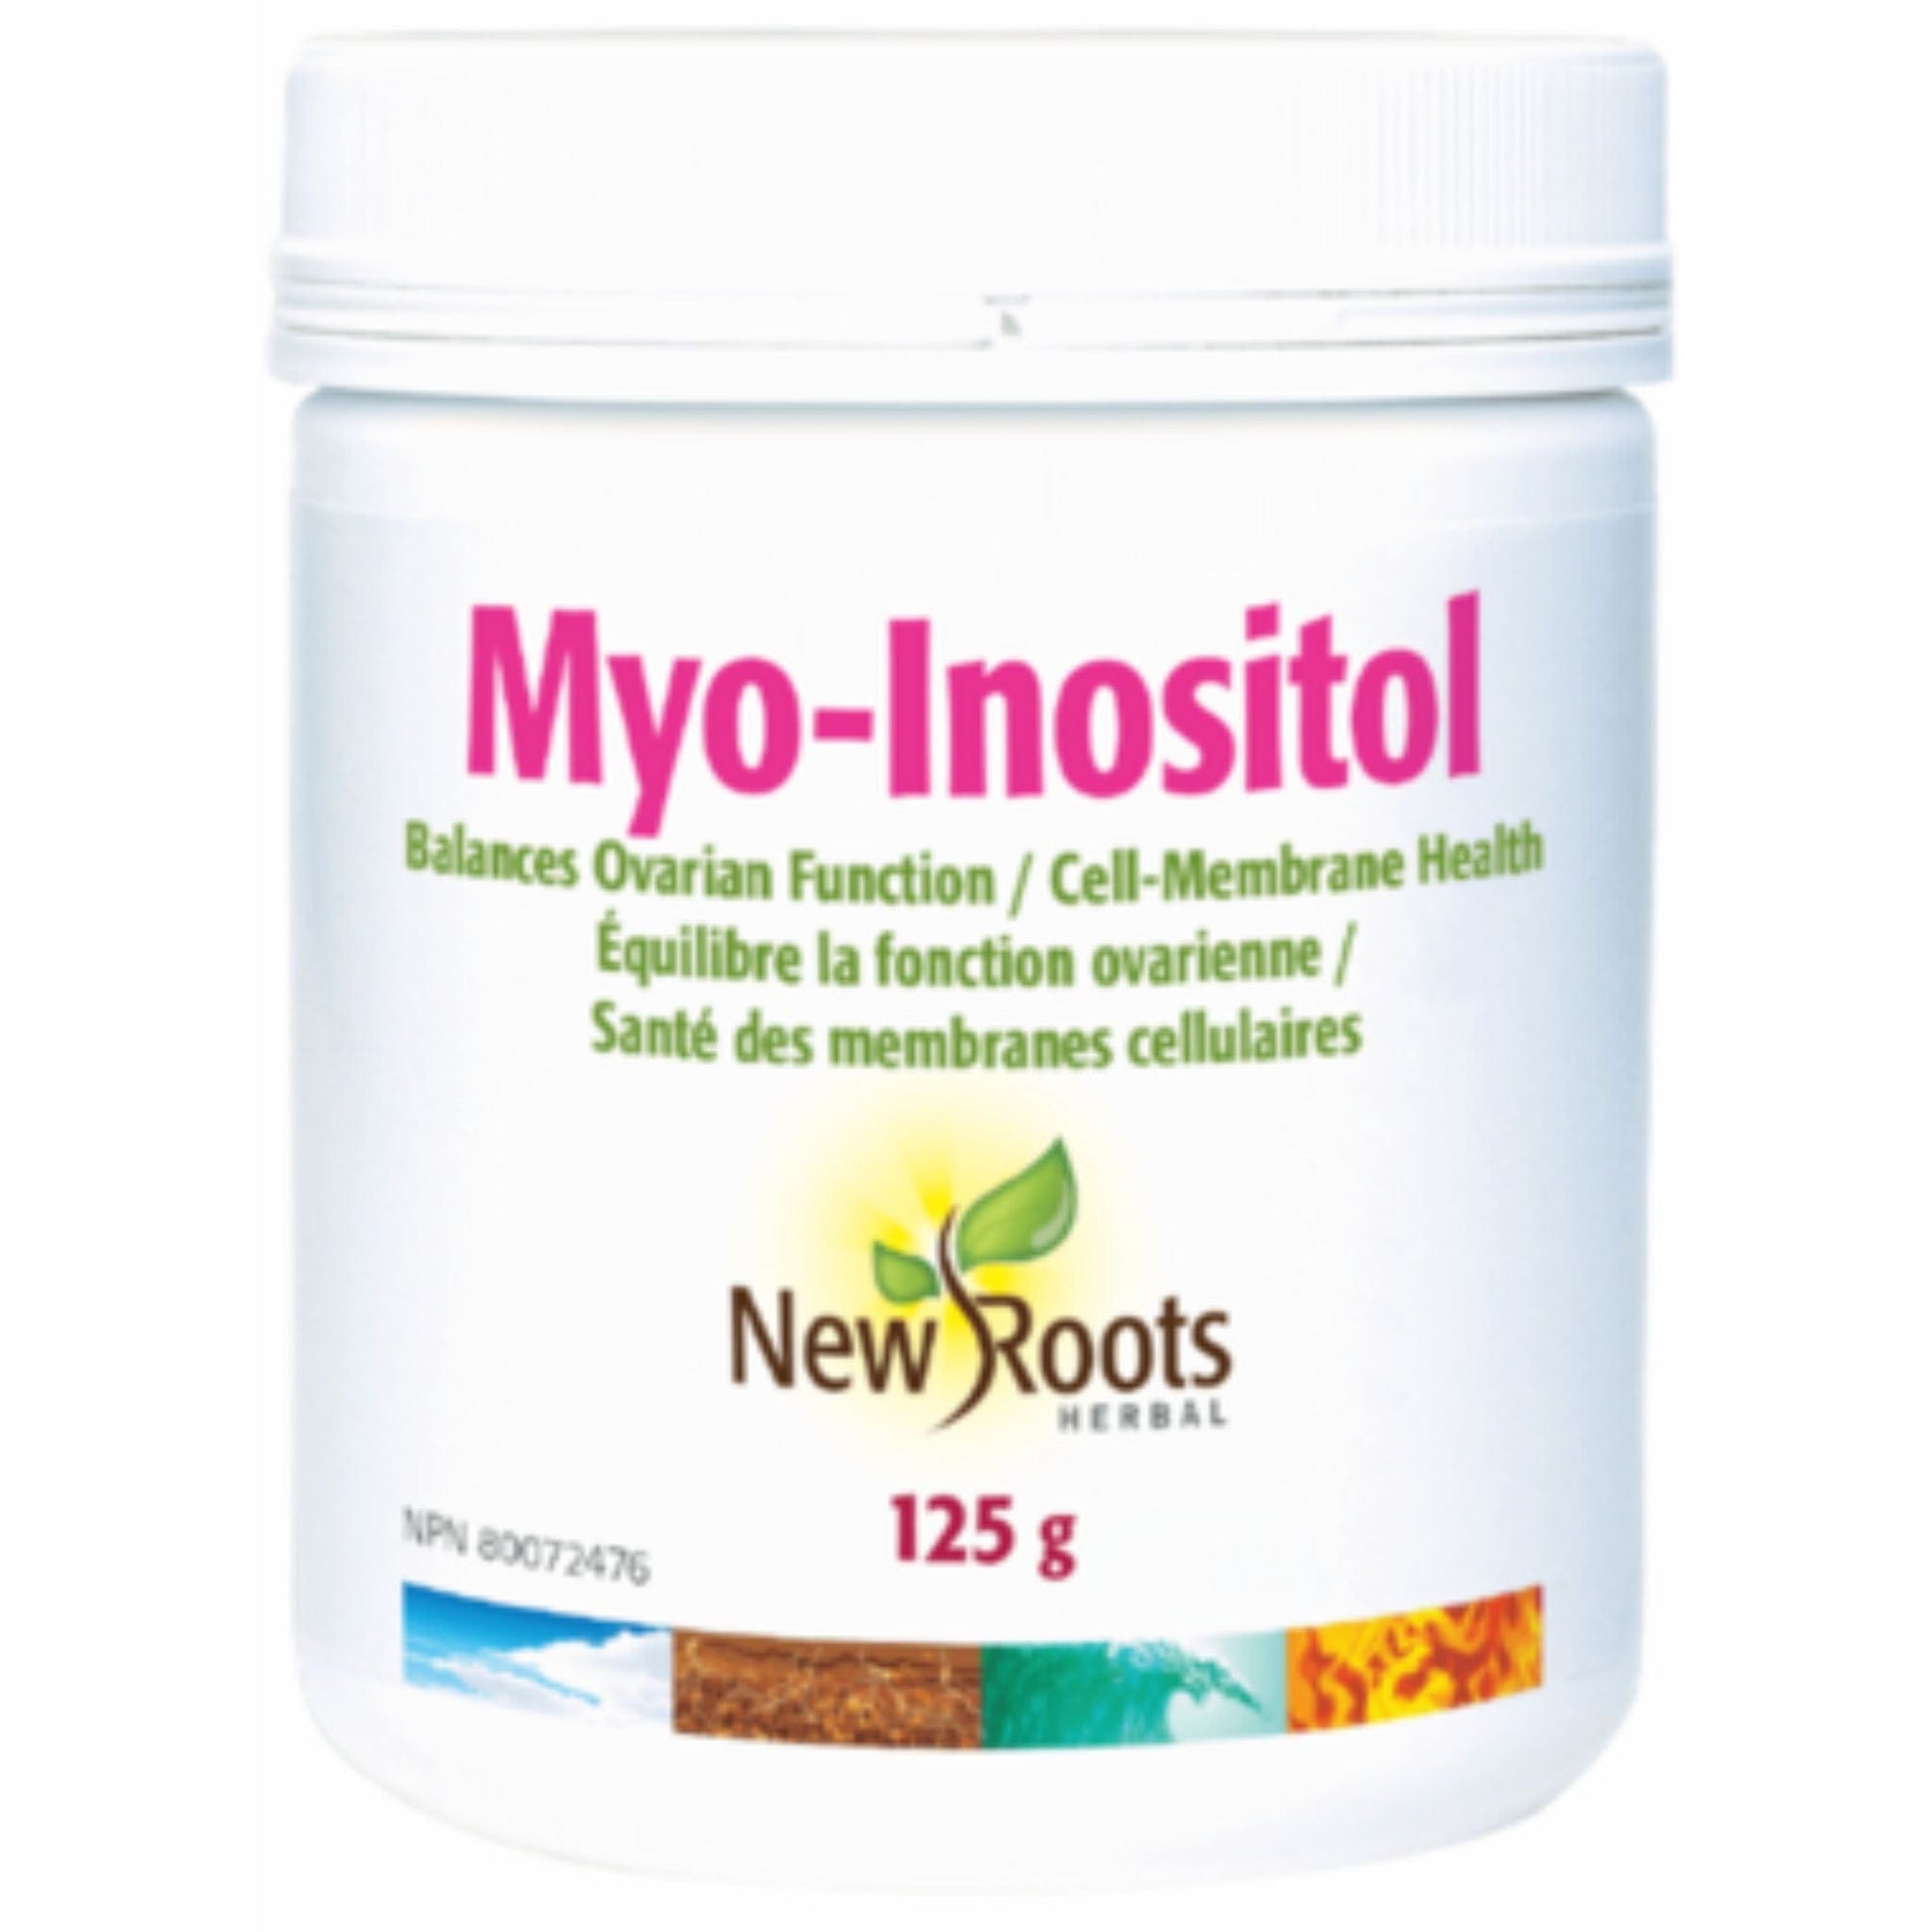 new-roots-myo-inositol-125g_1